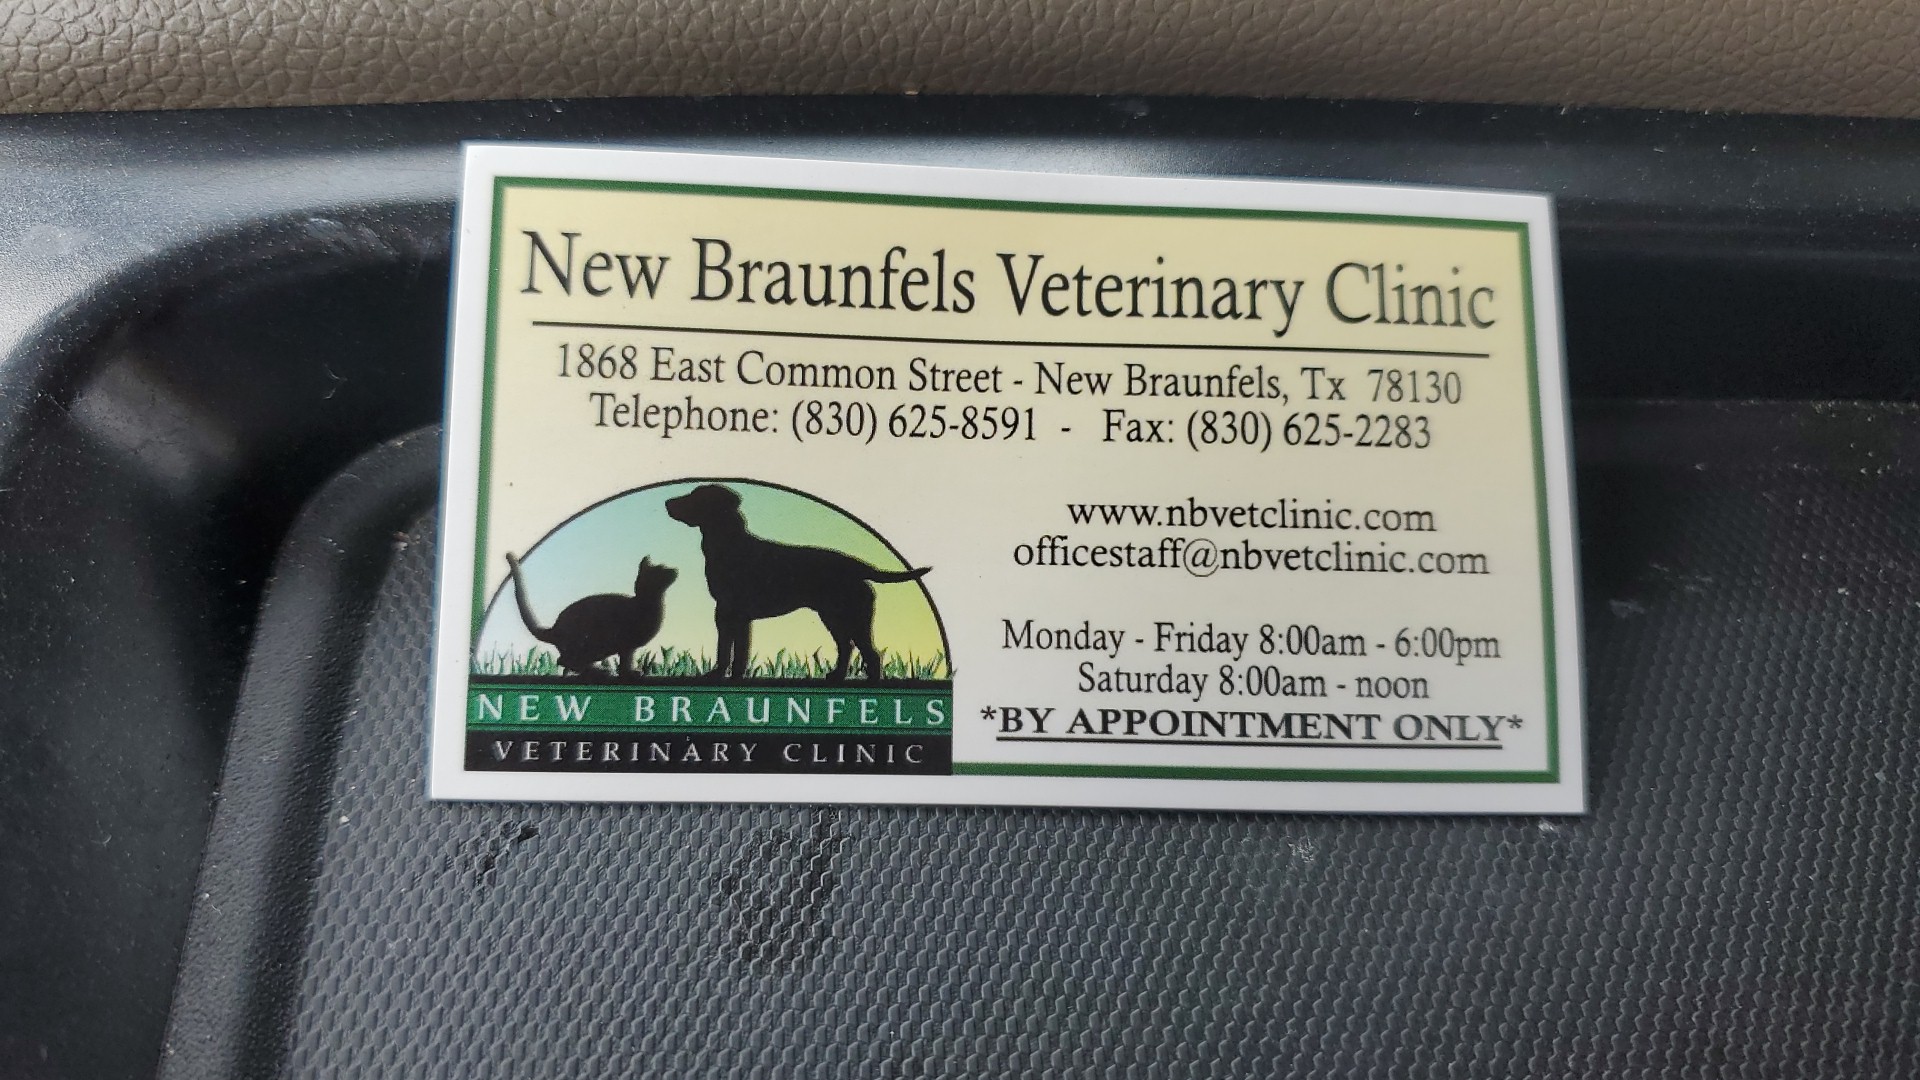 New Braunfels Veterinary Clinic